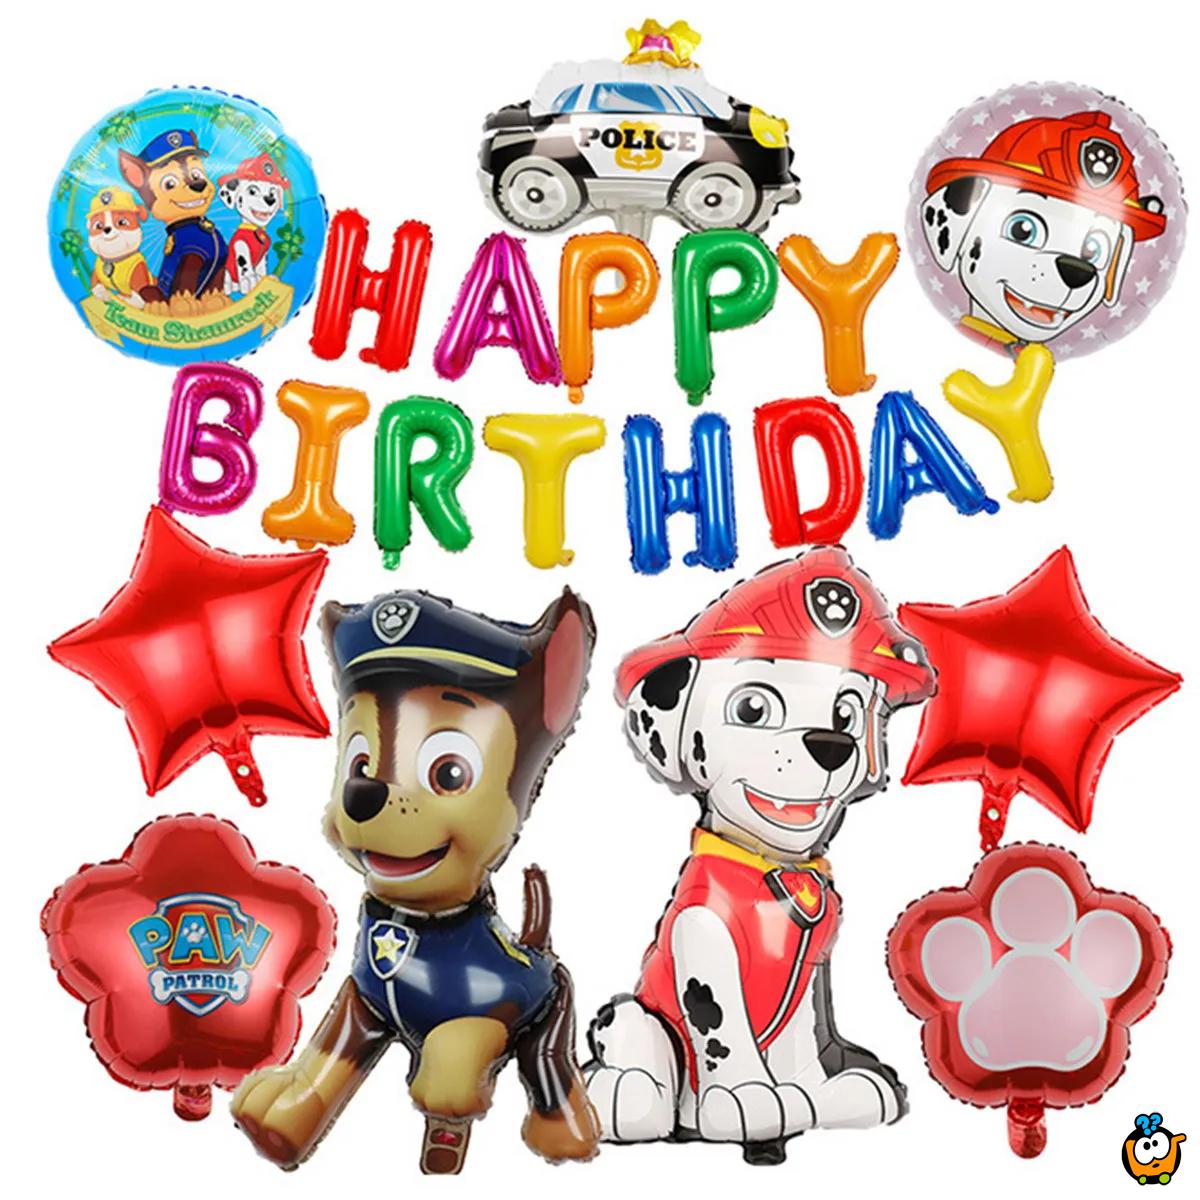 Patrolne Šape balon za dečije rođendane i proslave - Team Shamrock